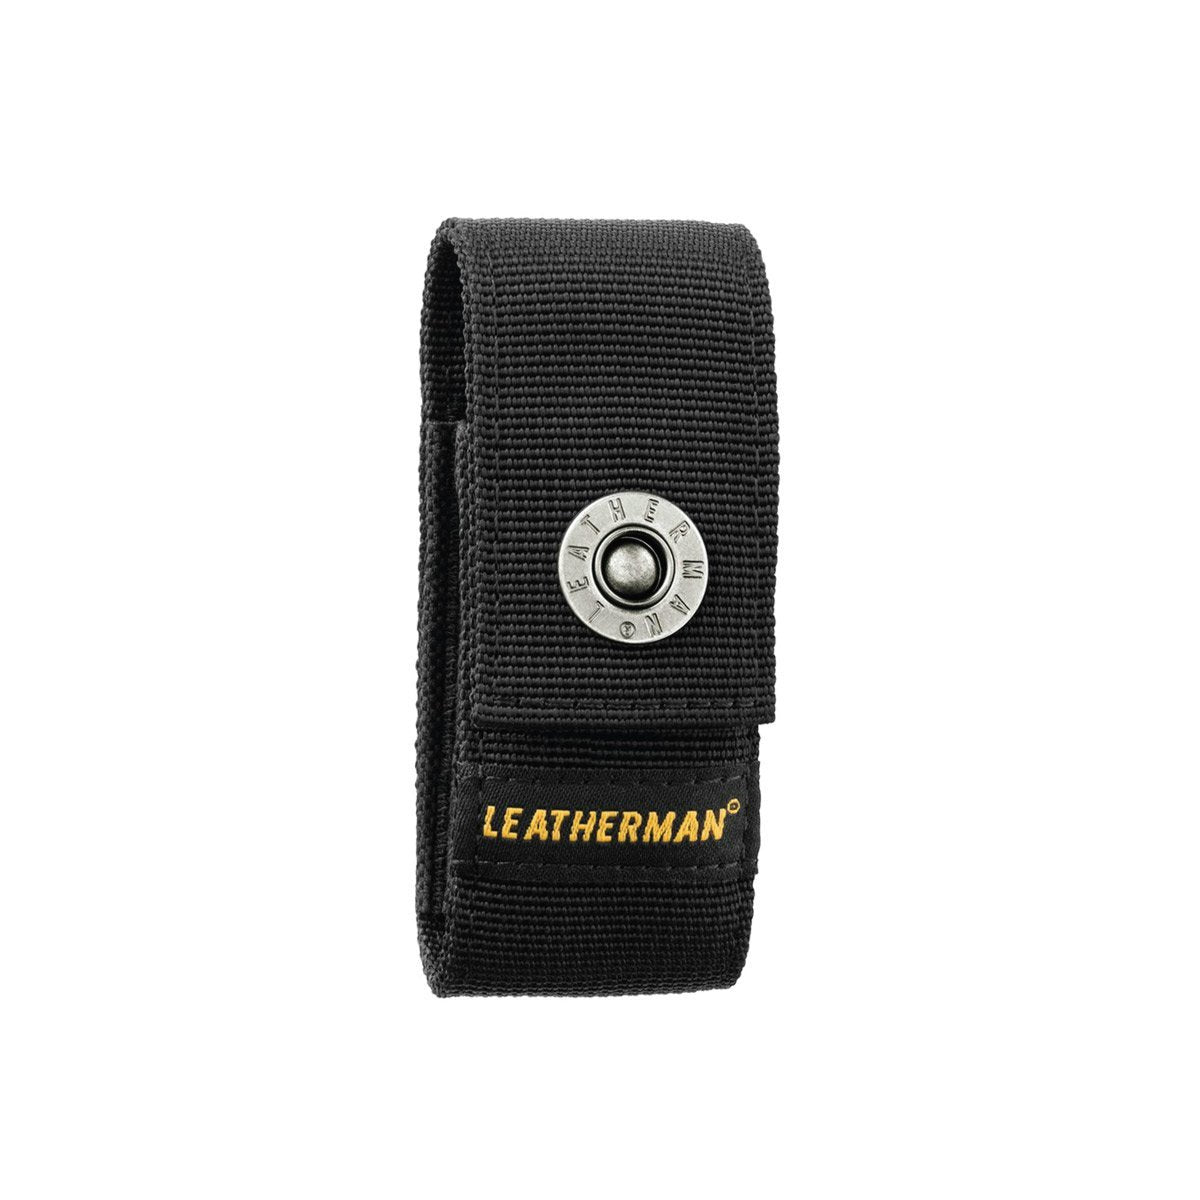 Leatherman Nylon Button Sheath Small Accessories Leatherman Tactical Gear Supplier Tactical Distributors Australia